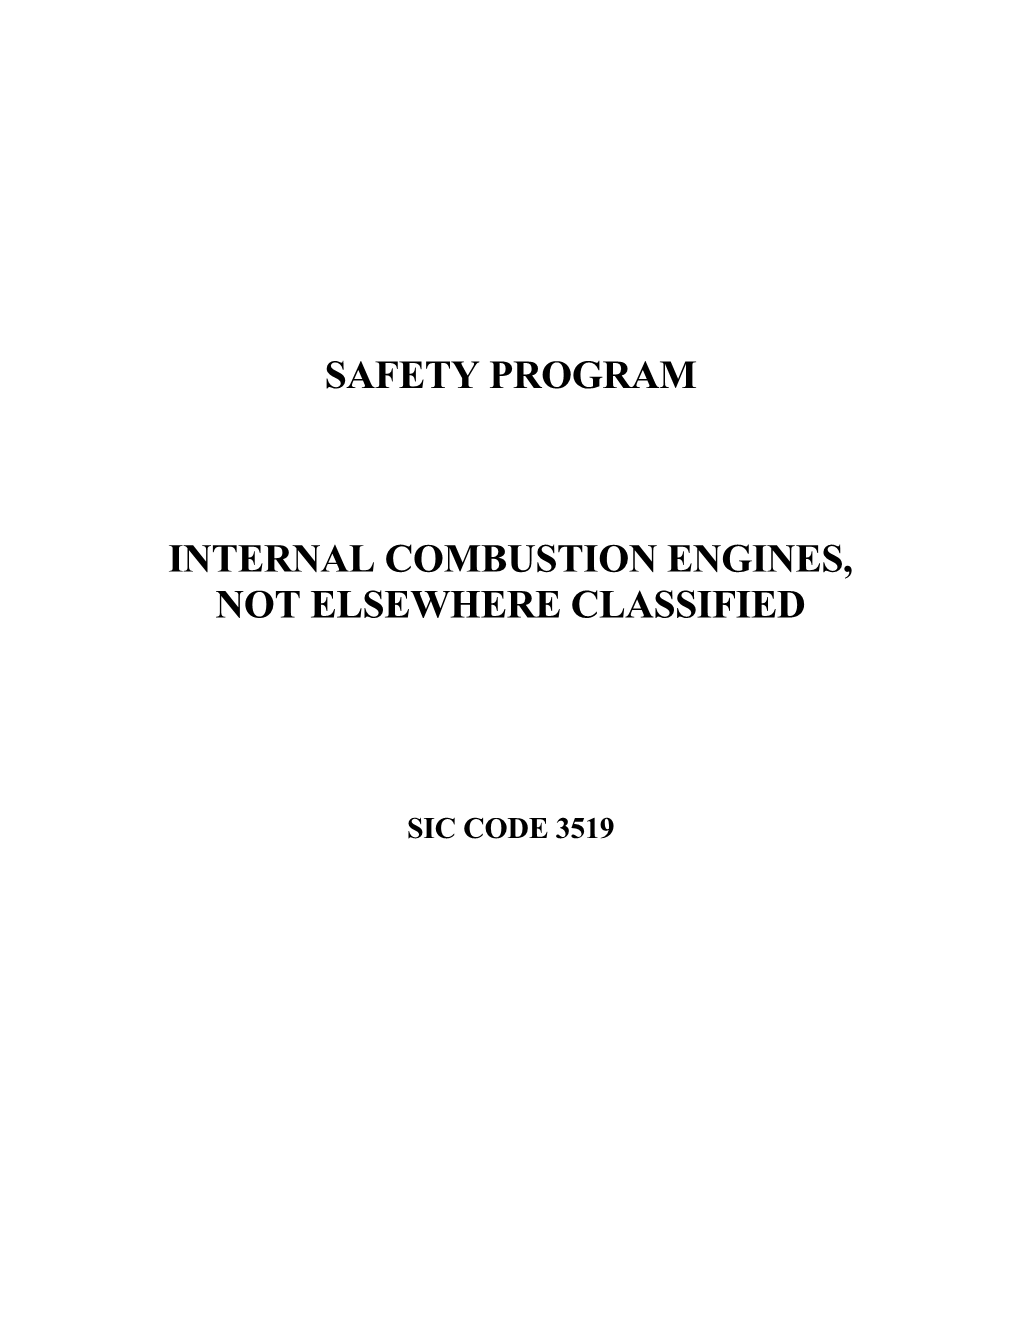 Internal Combustion Engines Safety Program